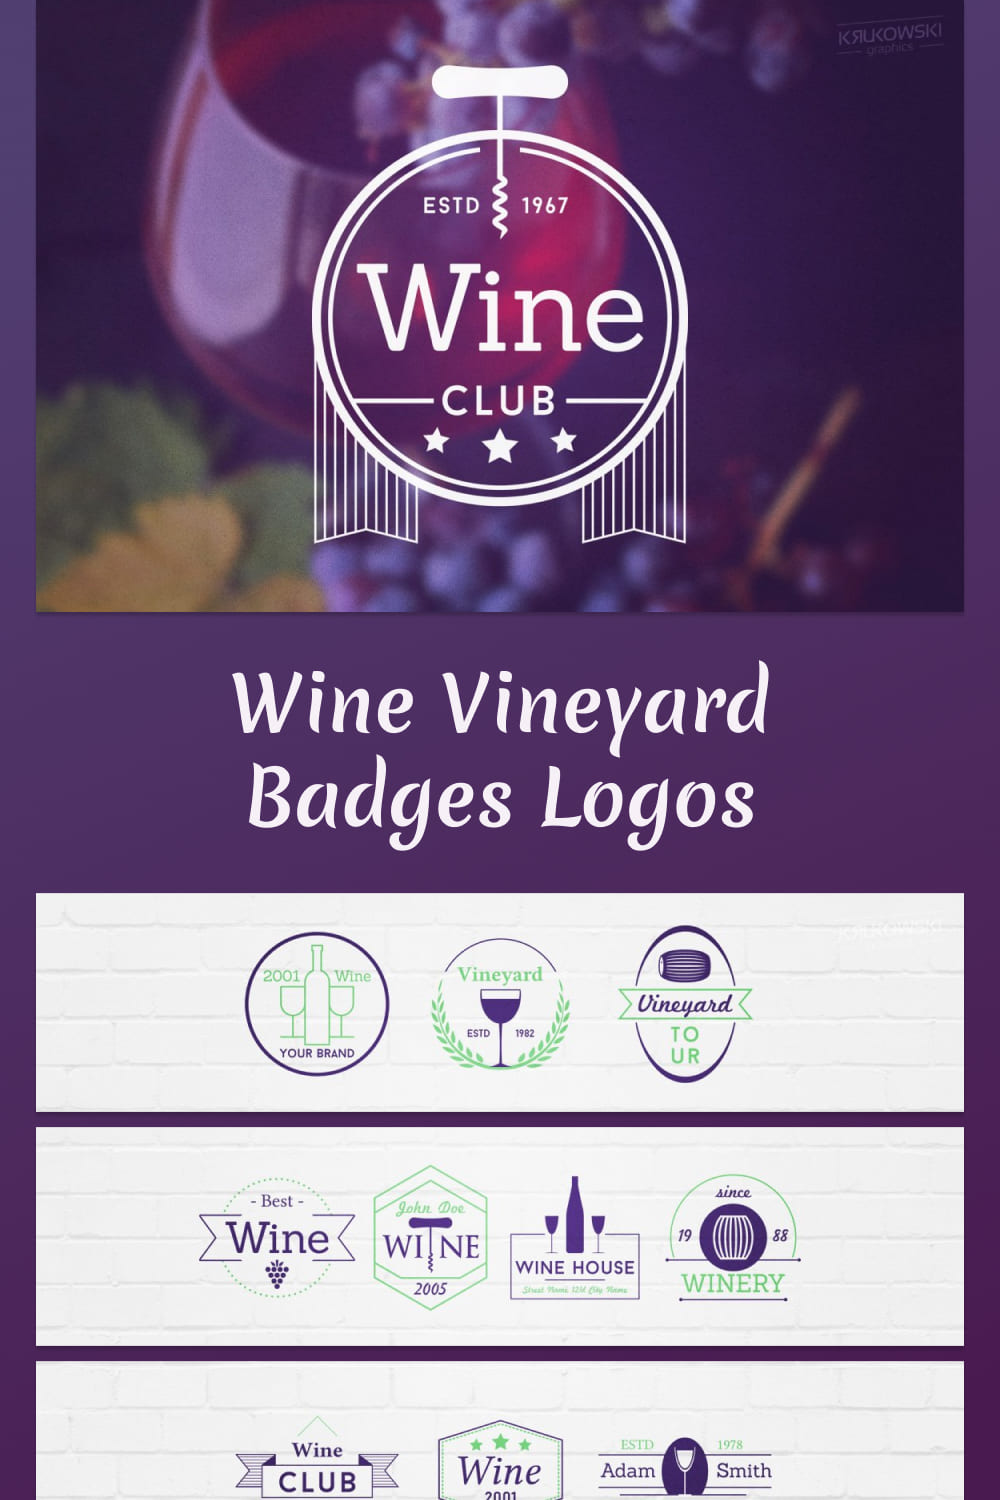 Wine Vineyard Badges Logos - Pinterest Image Preview.